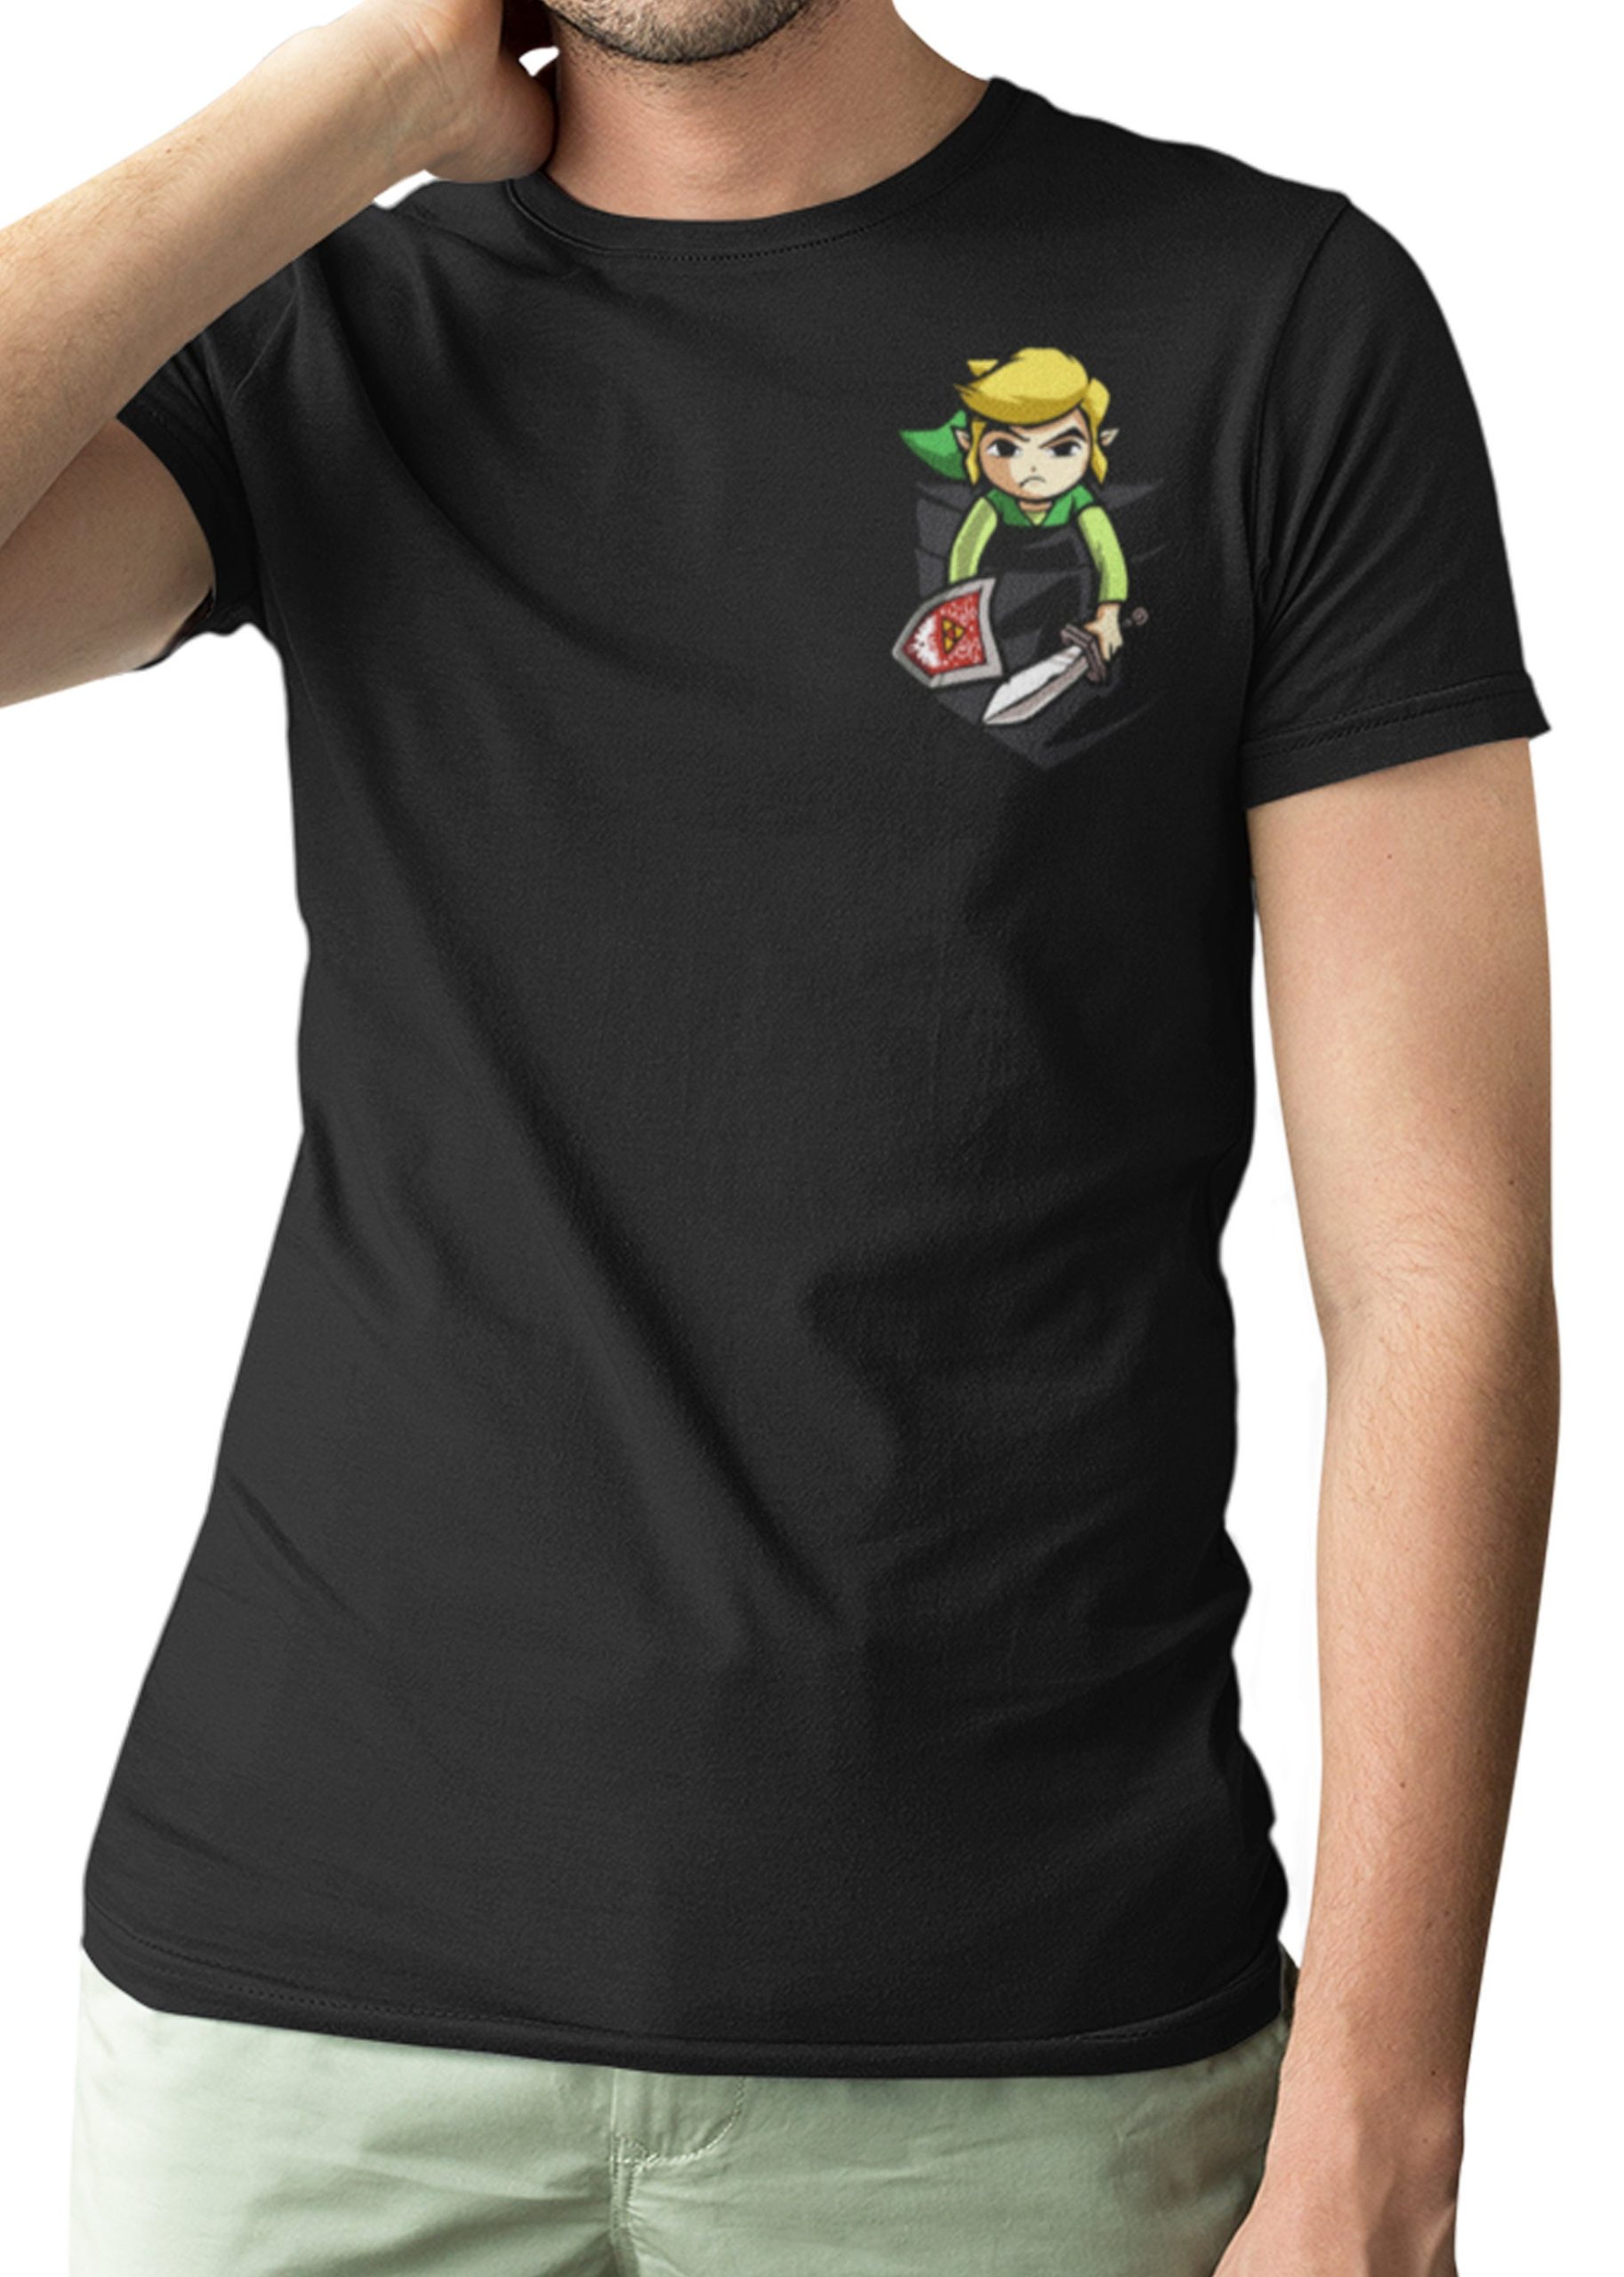 Link Pocket The Legend Inspired Gamer Unisex T-Shirt